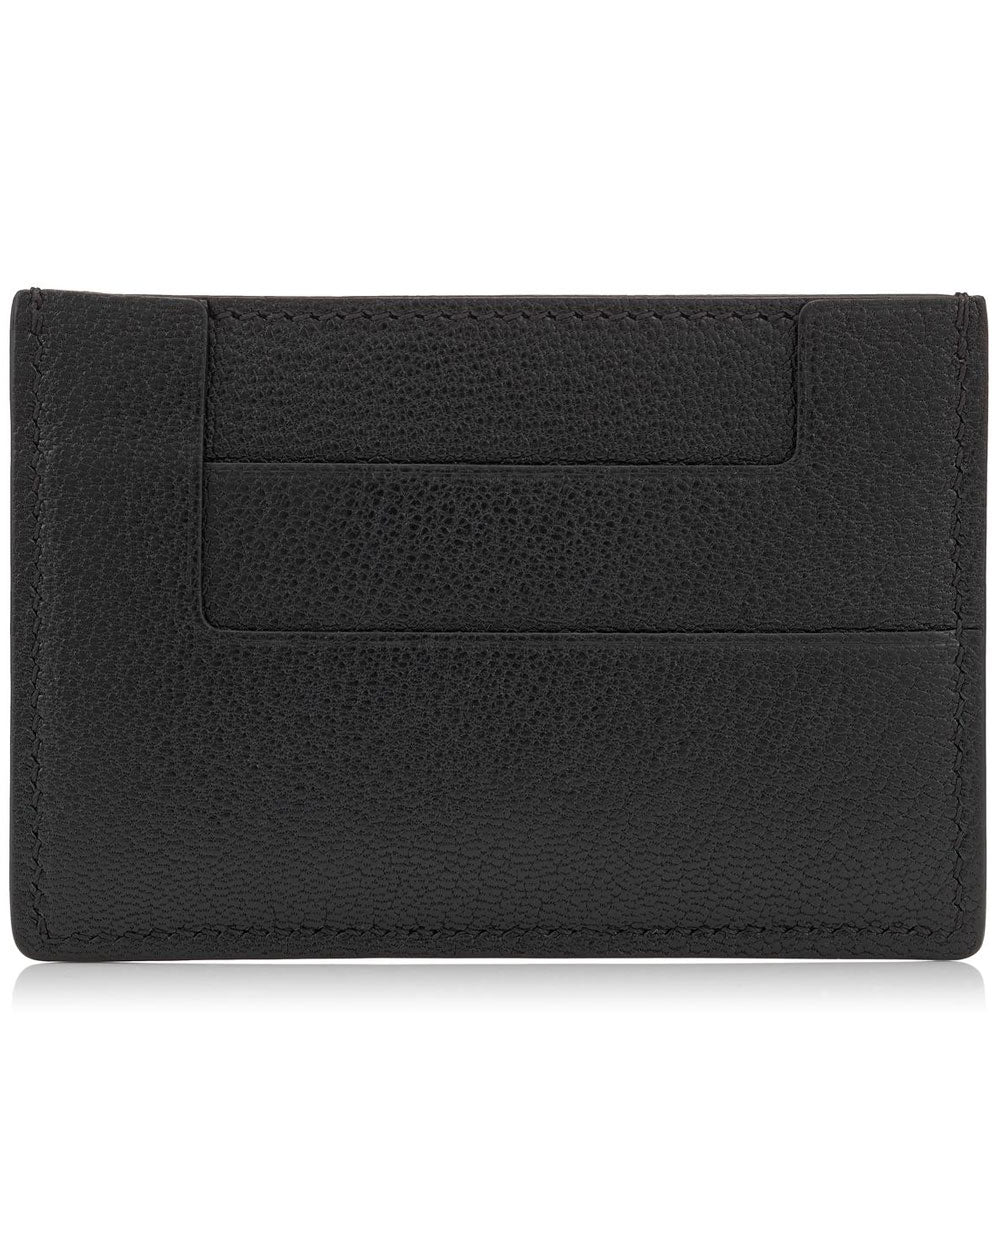 Grain Leather Card Holder in Black